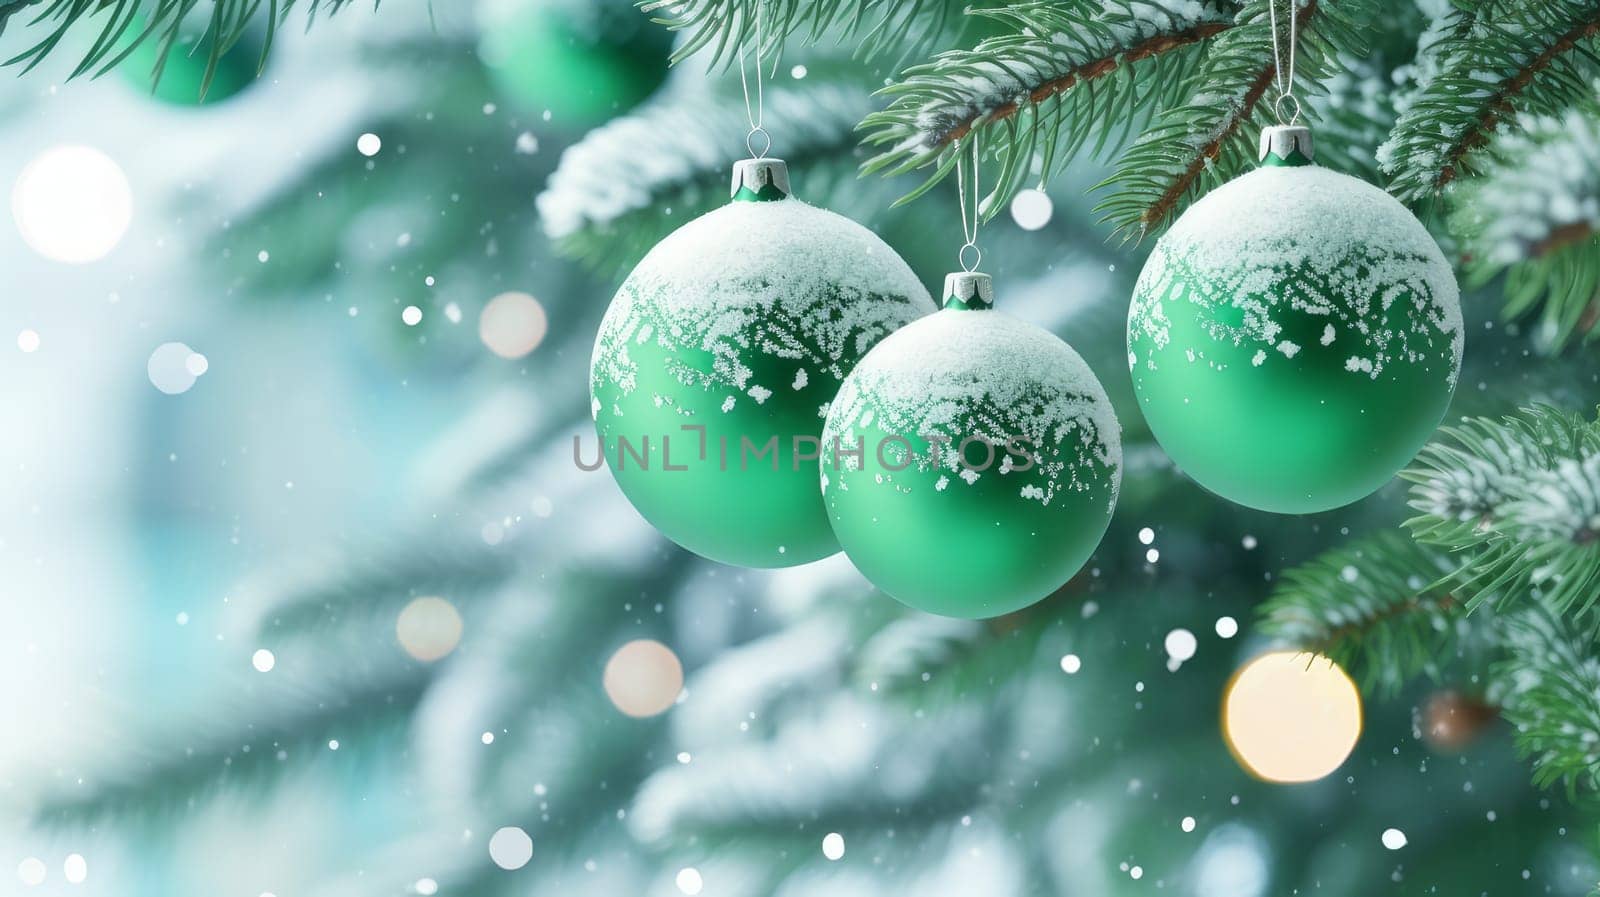 Green balls on fir branches, winter snowy background. festive winter season background, copy space. by Alla_Yurtayeva